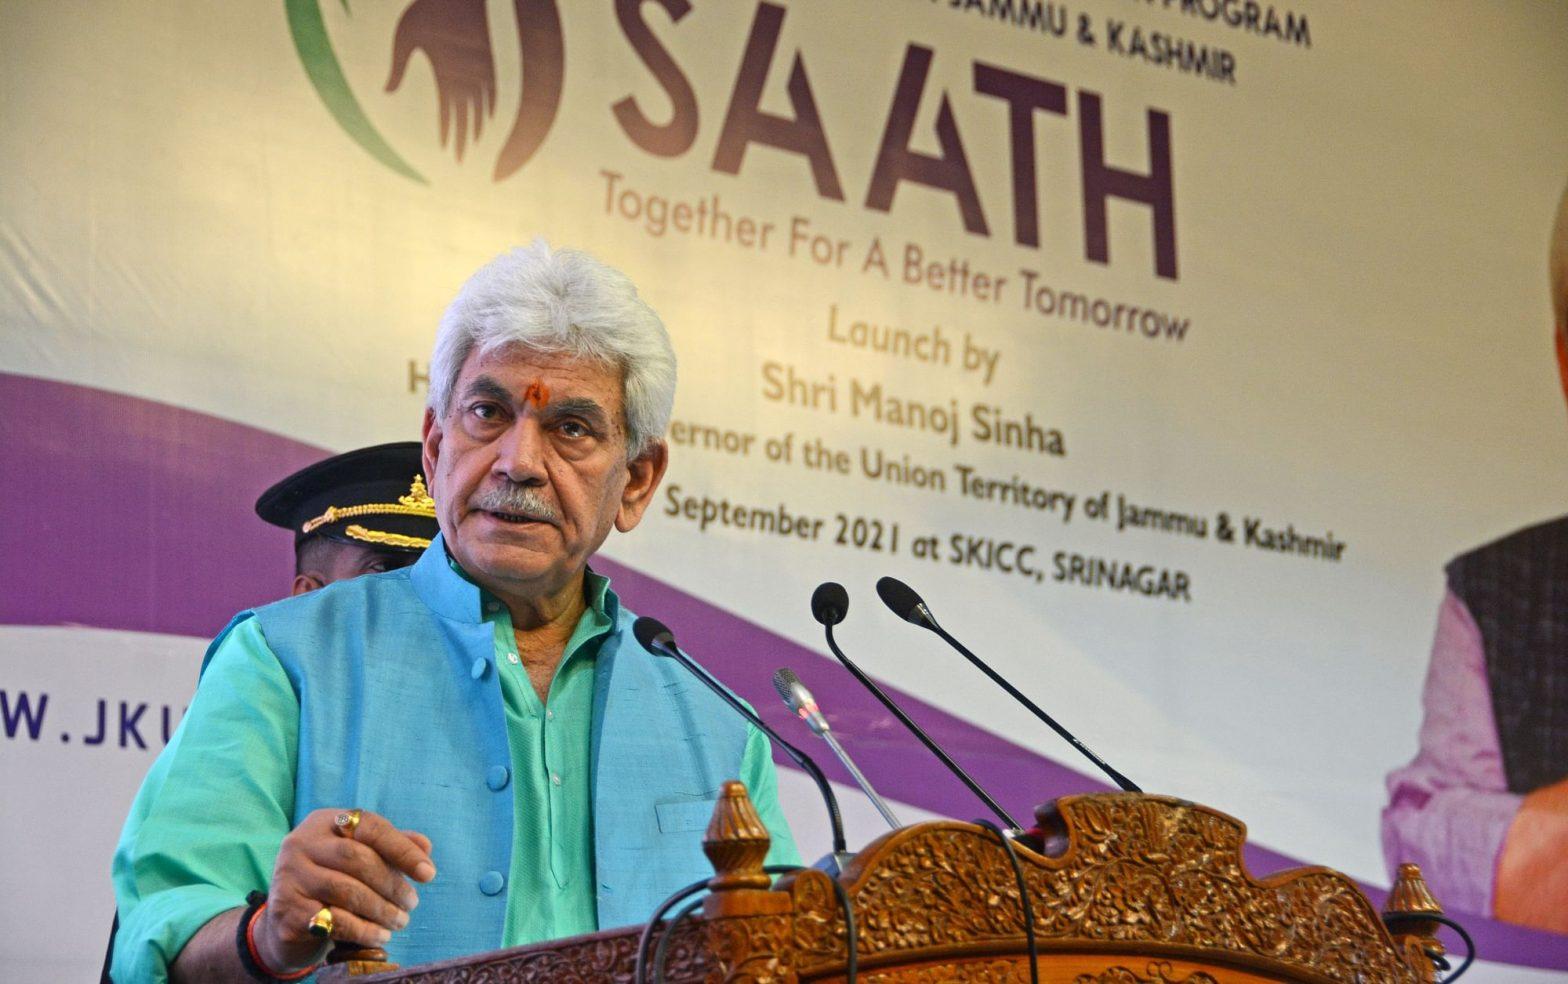 J&K LG Manoj Sinha inaugurates 'Saath' initiative for women_40.1